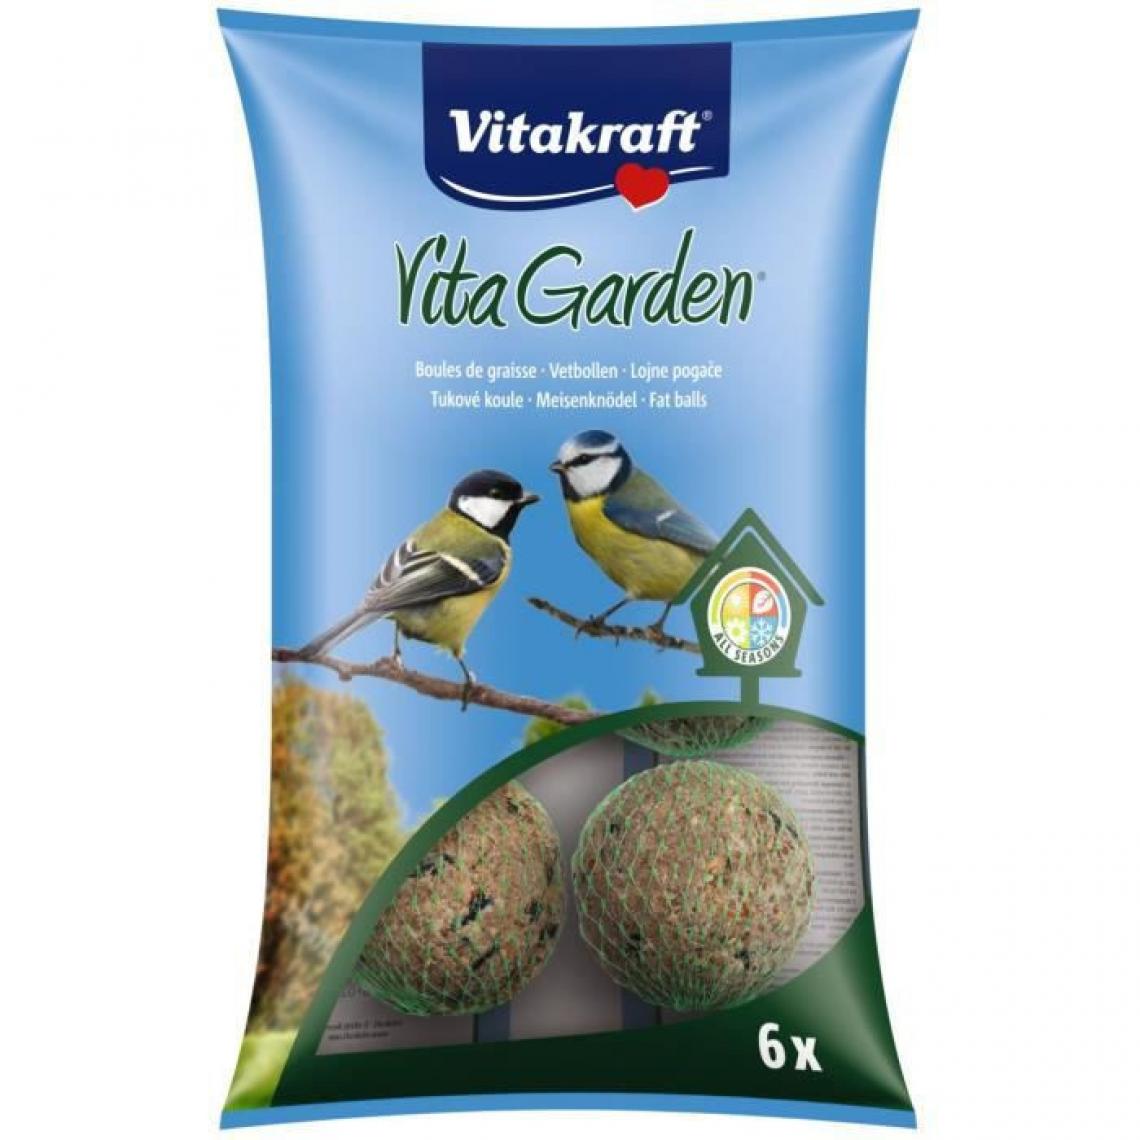 Vitakraft - VITAKRAFT Boules de Graisse pour oiseaux du ciel - 18x6 - Alimentation pour oiseaux du ciel